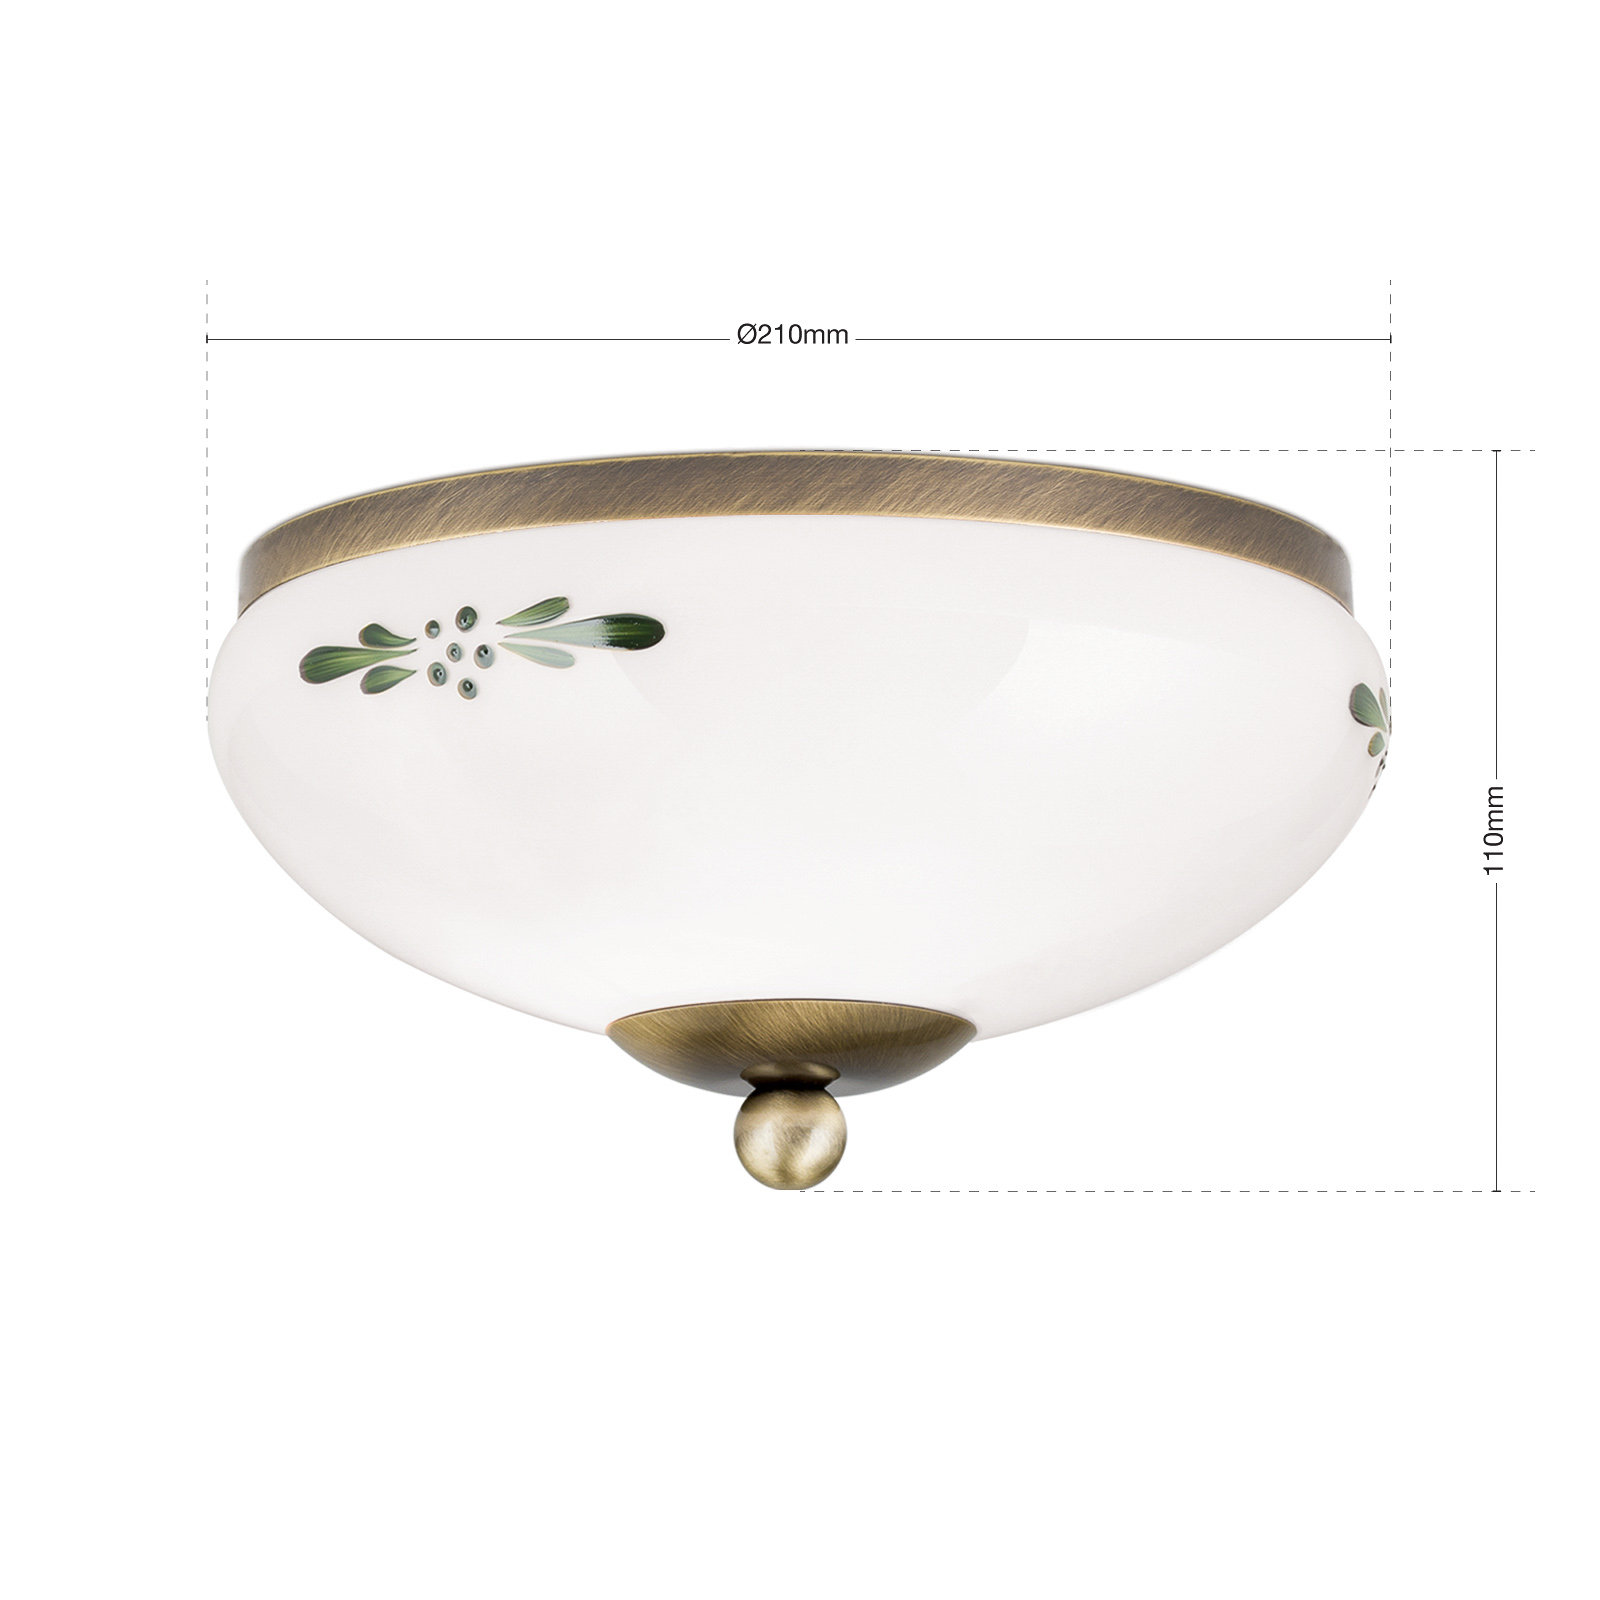 Lampa sufitowa Landhaus patyna opal zielona Ø 21cm